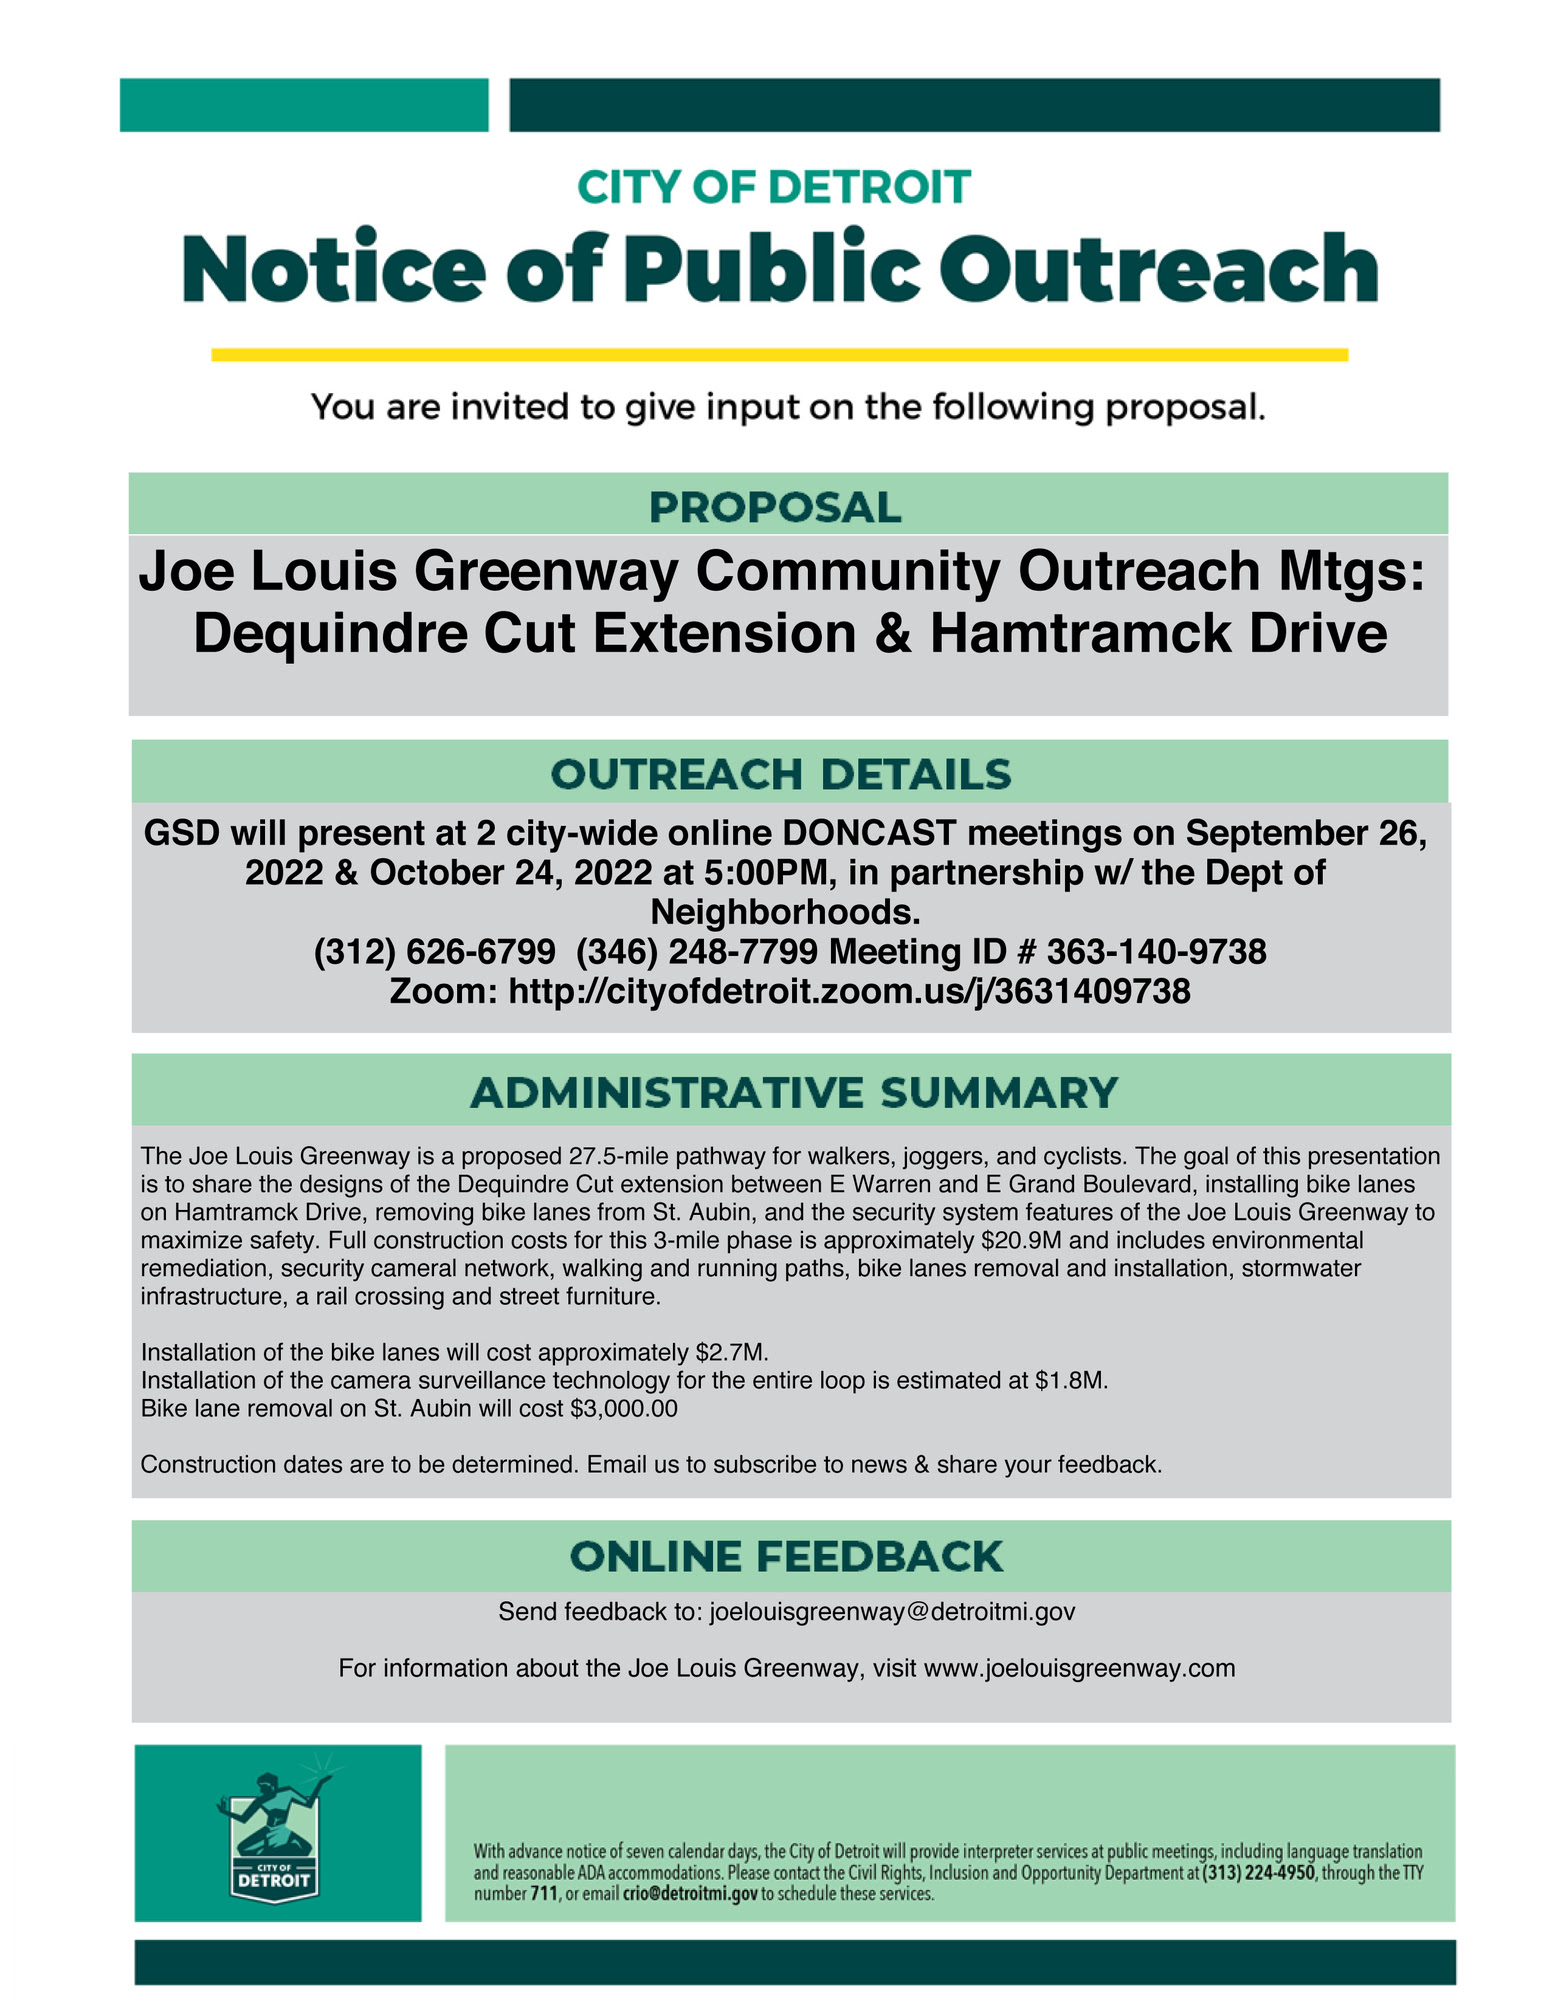 Joe Louis Greenway community outreach notice - Sept 26